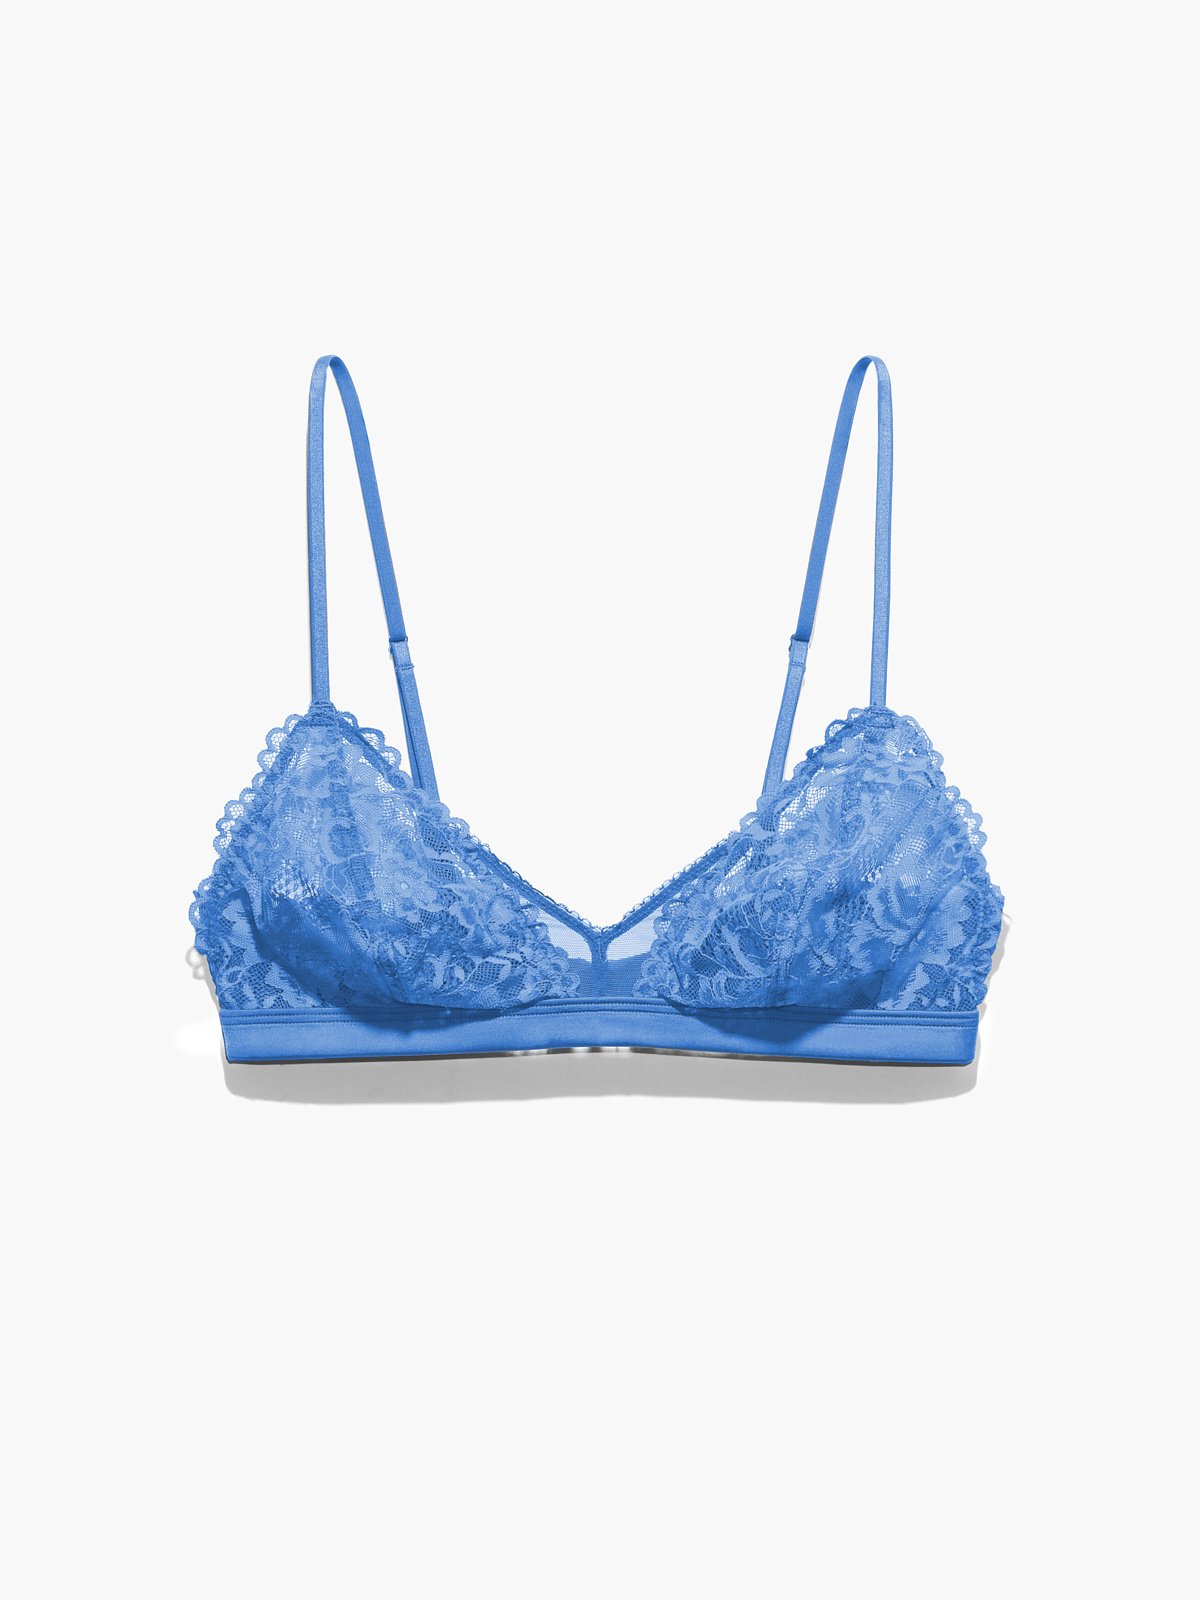 Primark Blue Floral Lace Trimmed Bralette Size 2XS